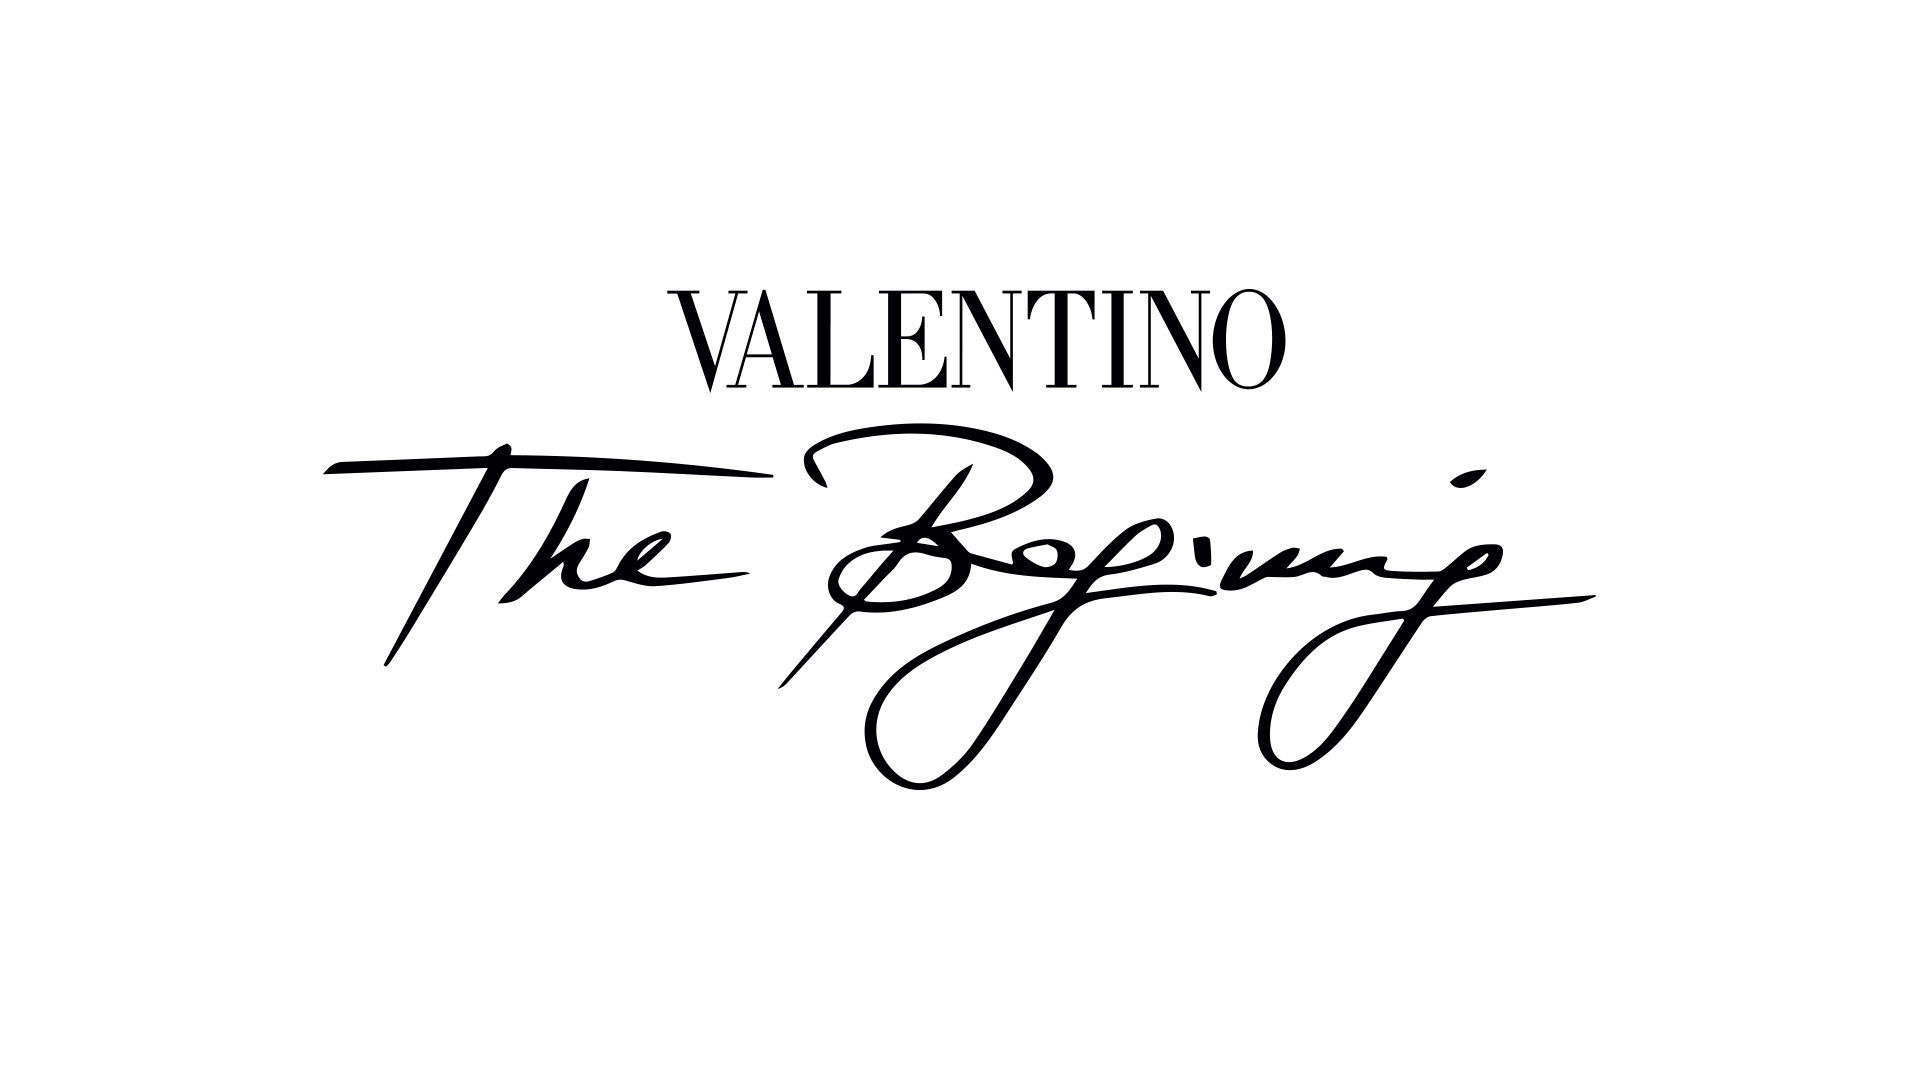 Valentino logo Stock Photos, Royalty Free Valentino logo Images